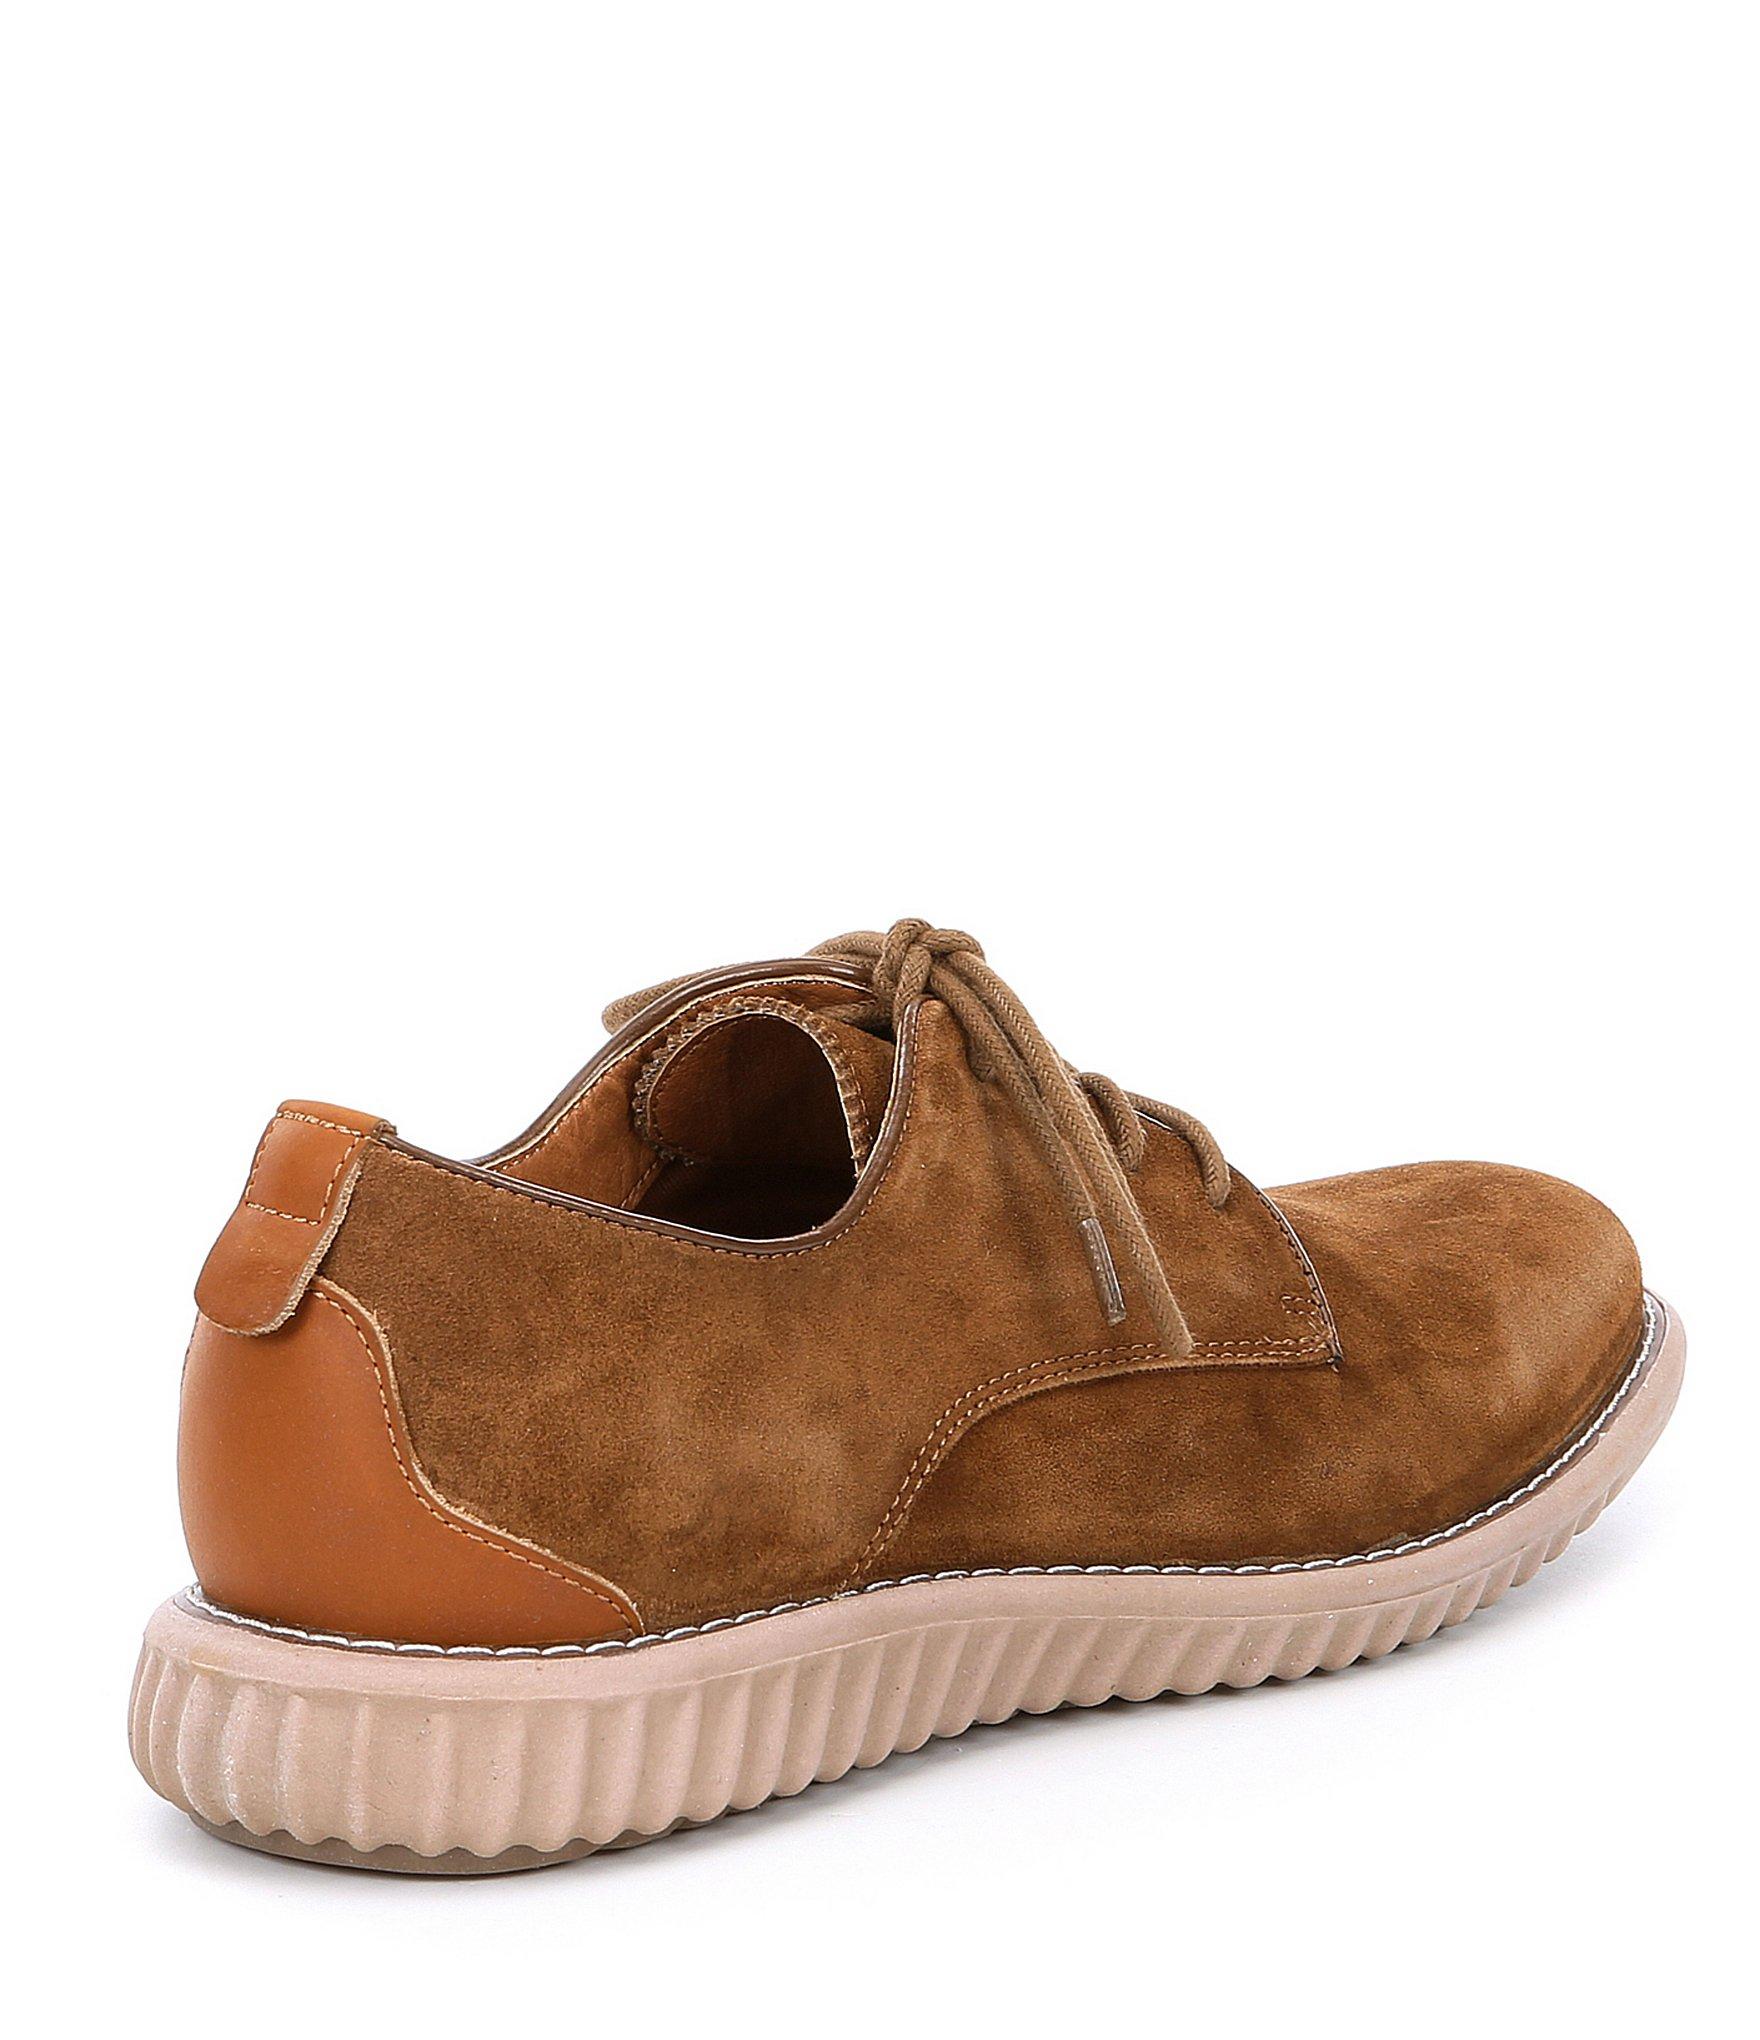 Steve Madden Men's Varek Suede Shoes in Brown for Men - Lyst